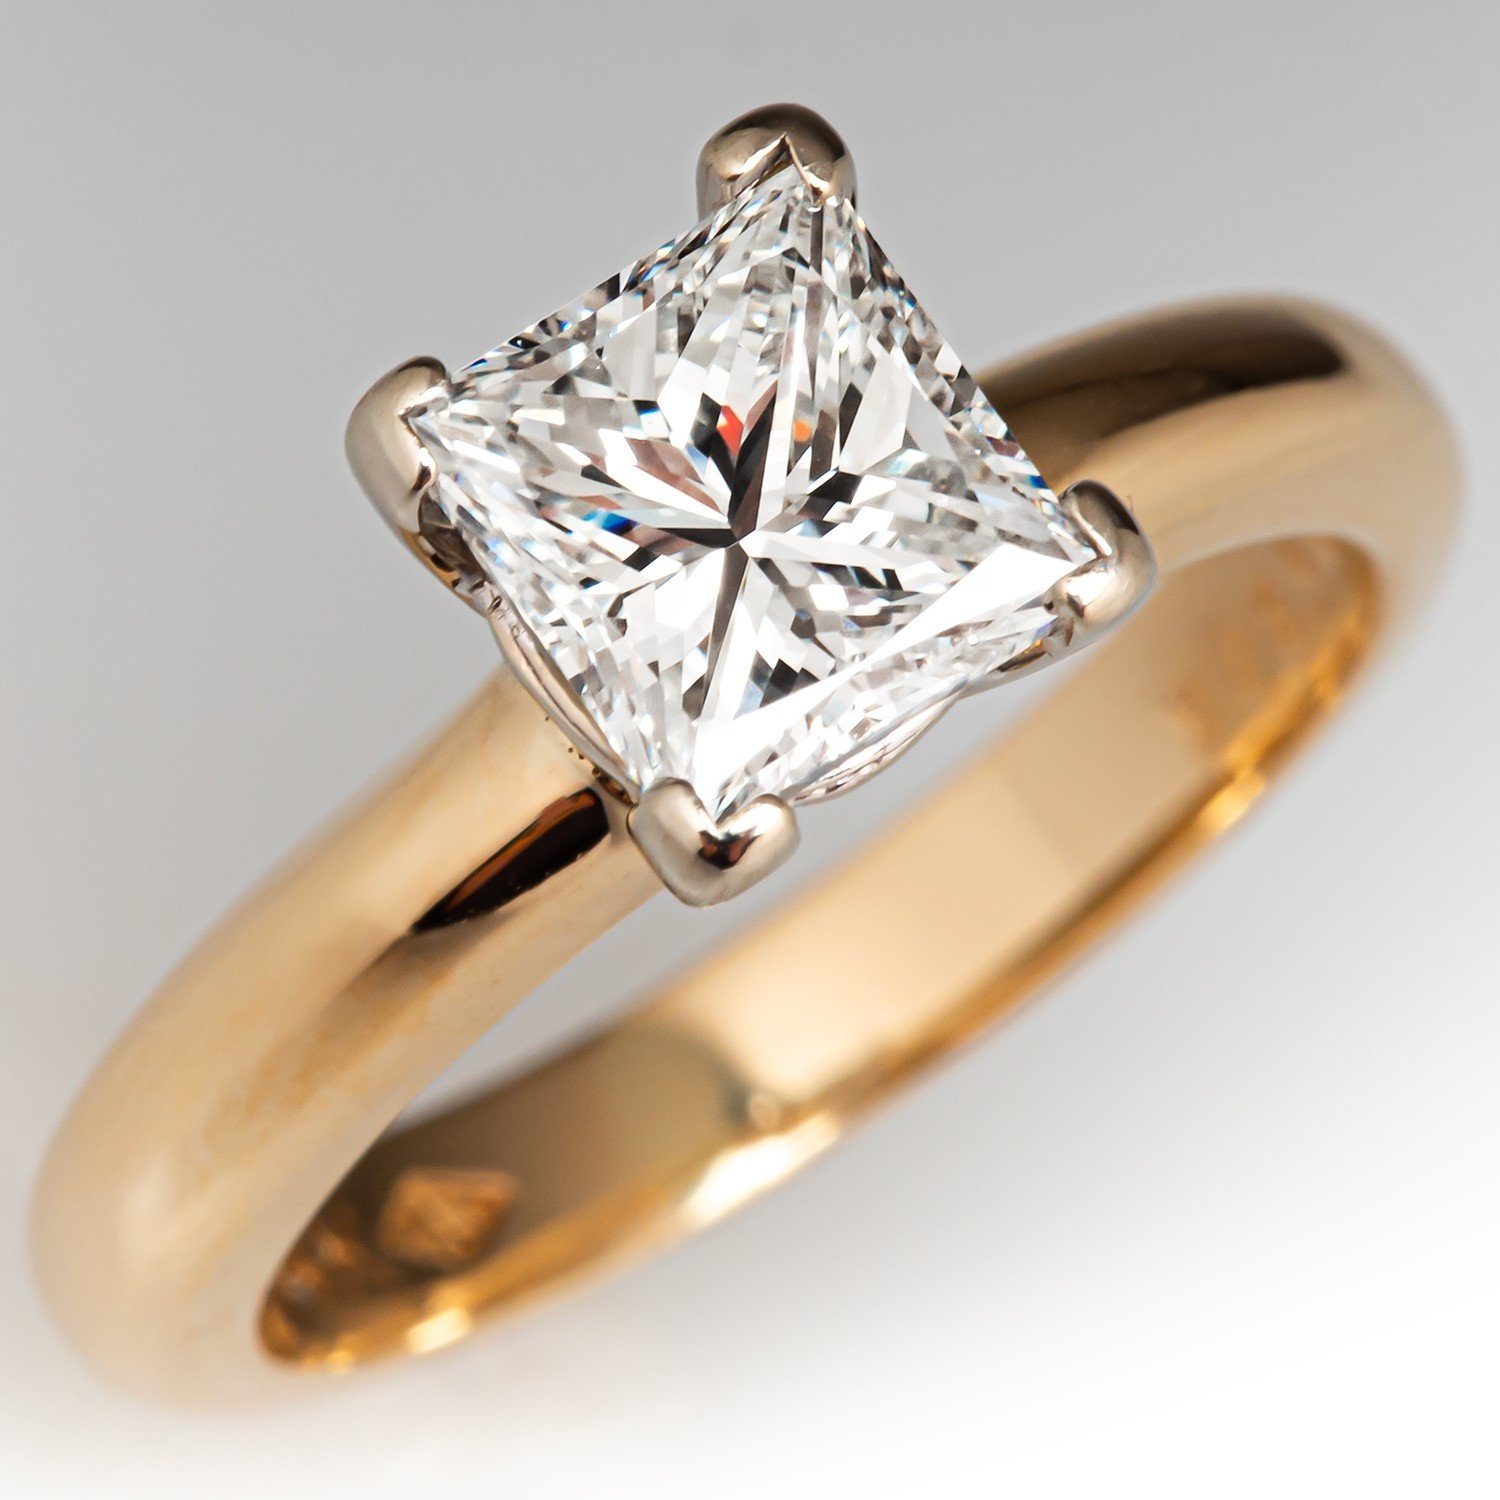 Half Carat Princess Cut Diamond Ring - The Expert Buying Guide